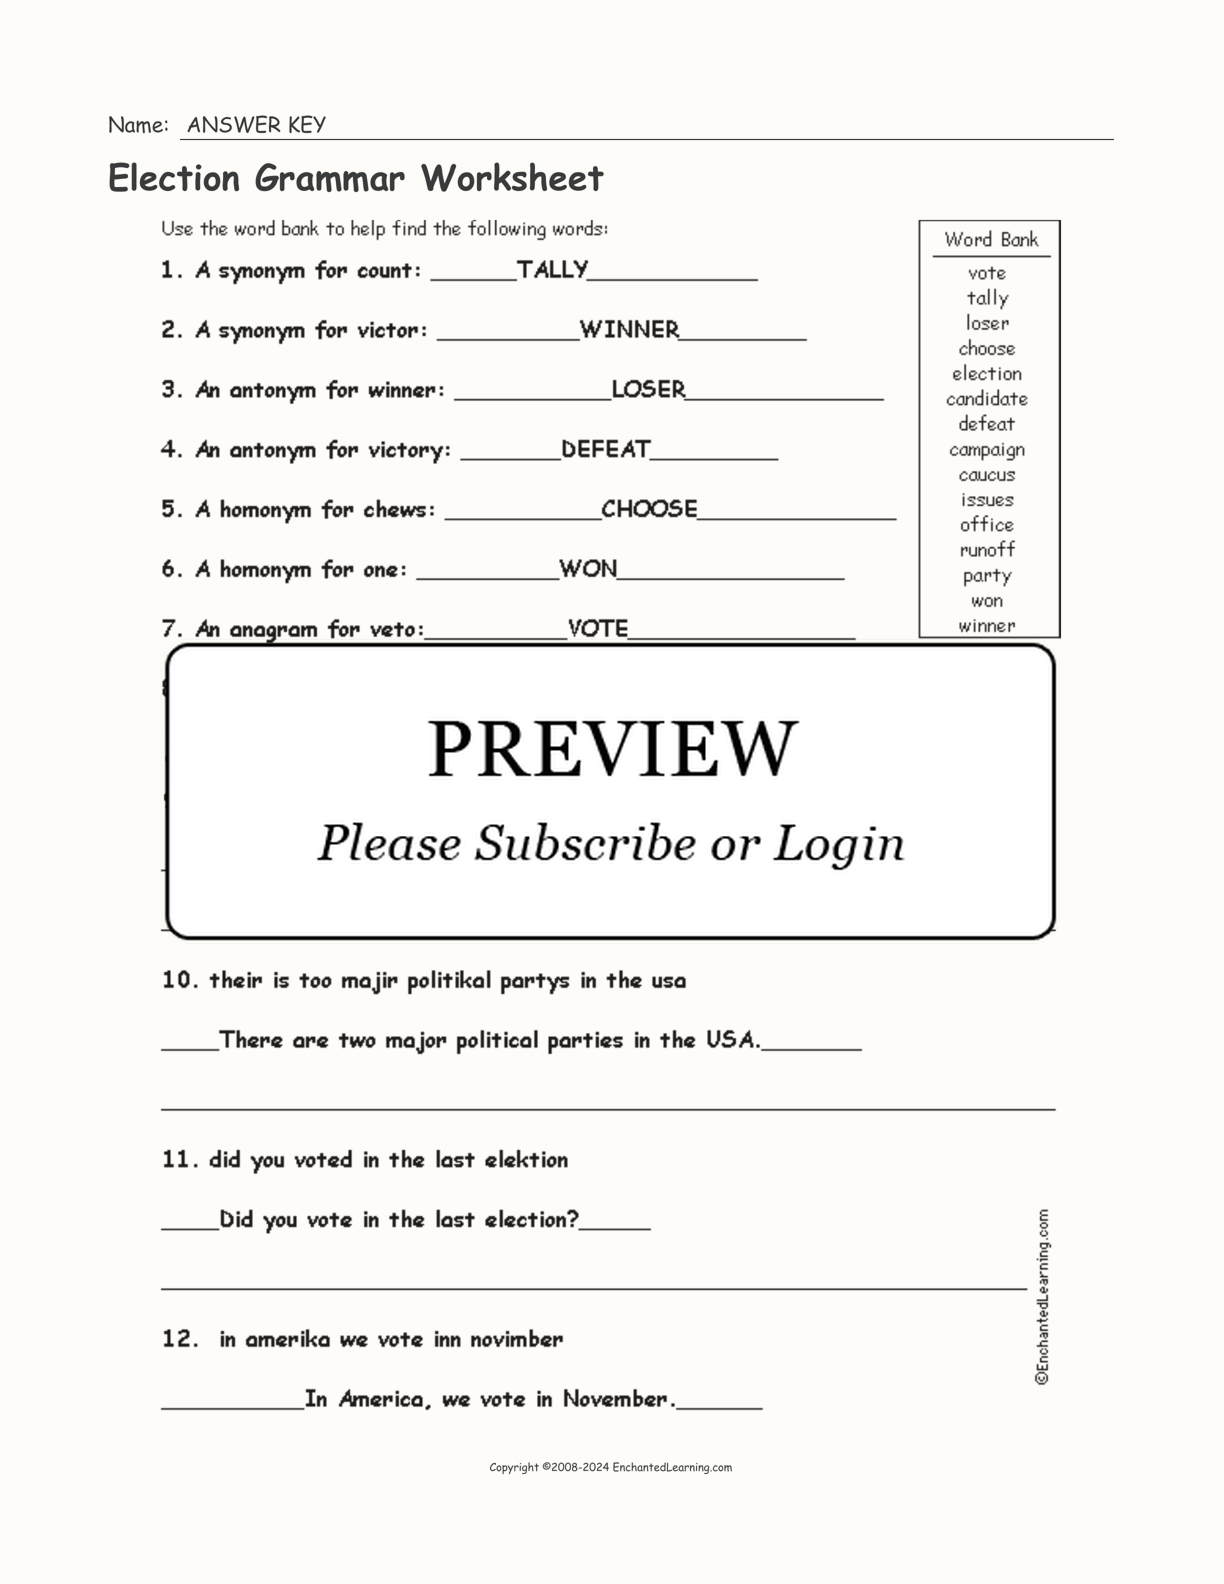 Election Grammar Worksheet interactive worksheet page 2